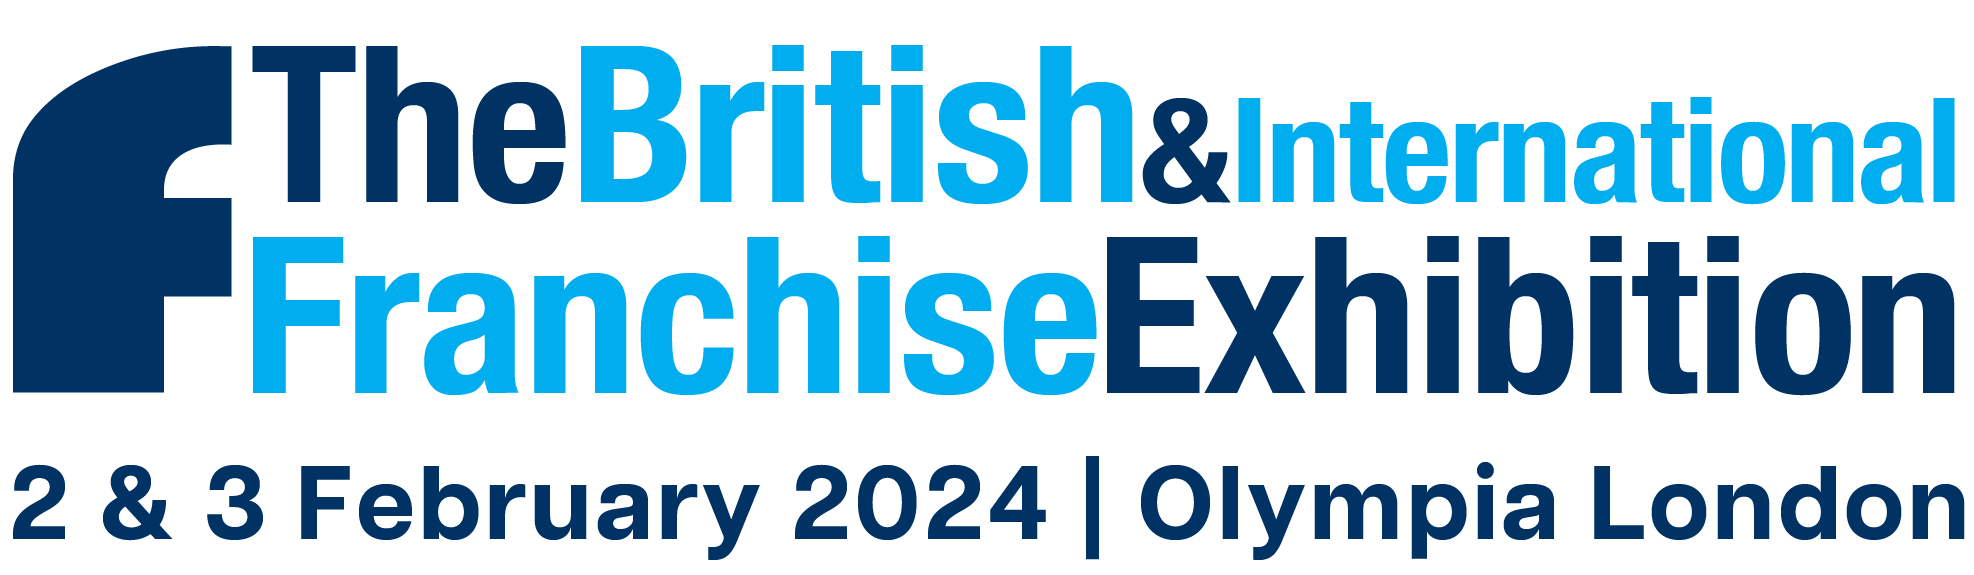 The British & International Franchise Exhibition 2024